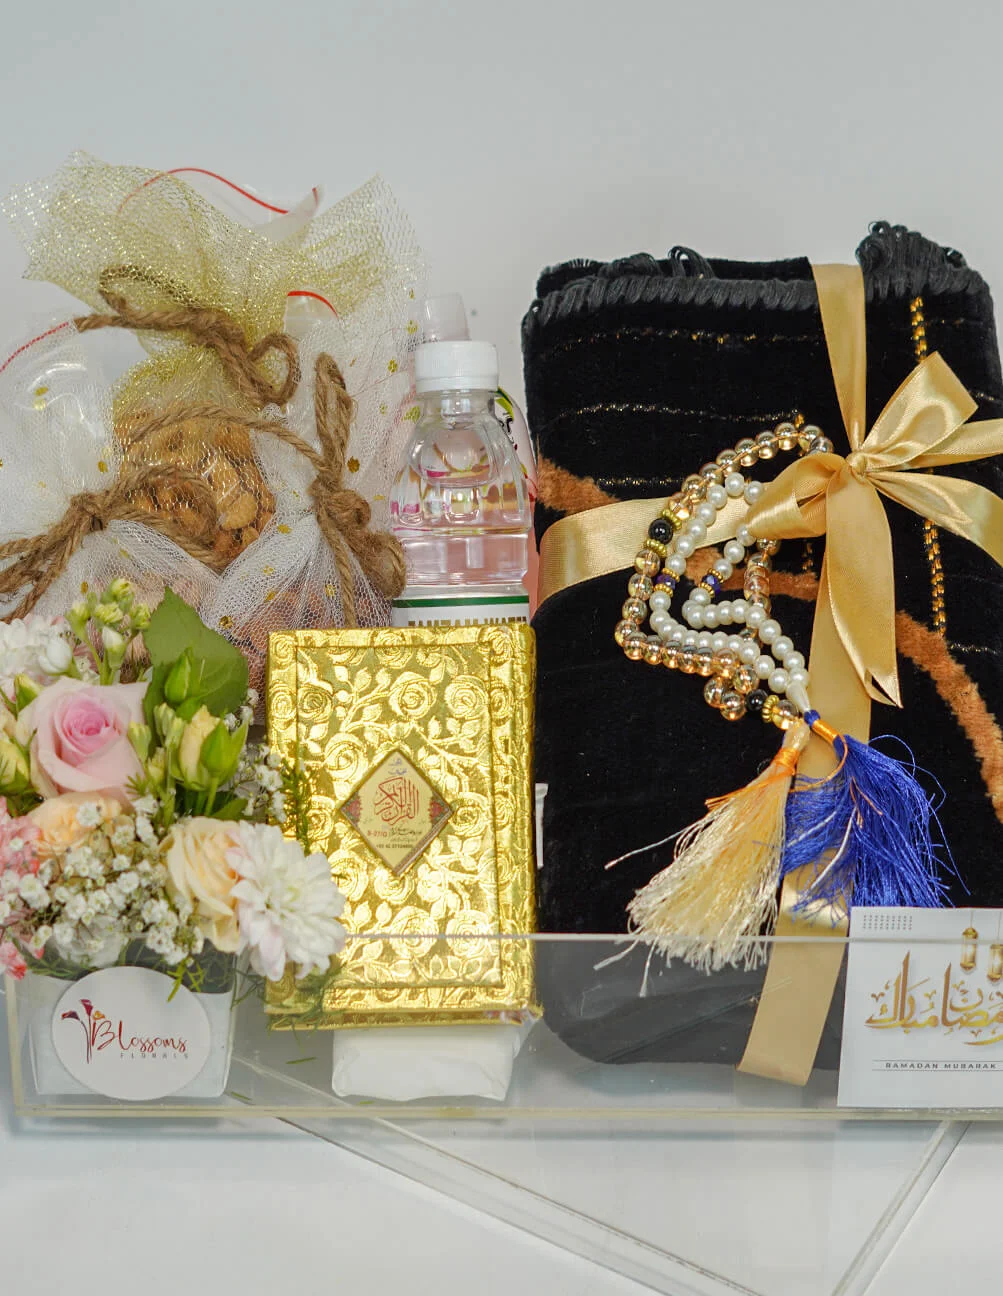 Groom's shoe, belt | Wedding gift pack, Wedding gift boxes, Wedding gifts  for groom